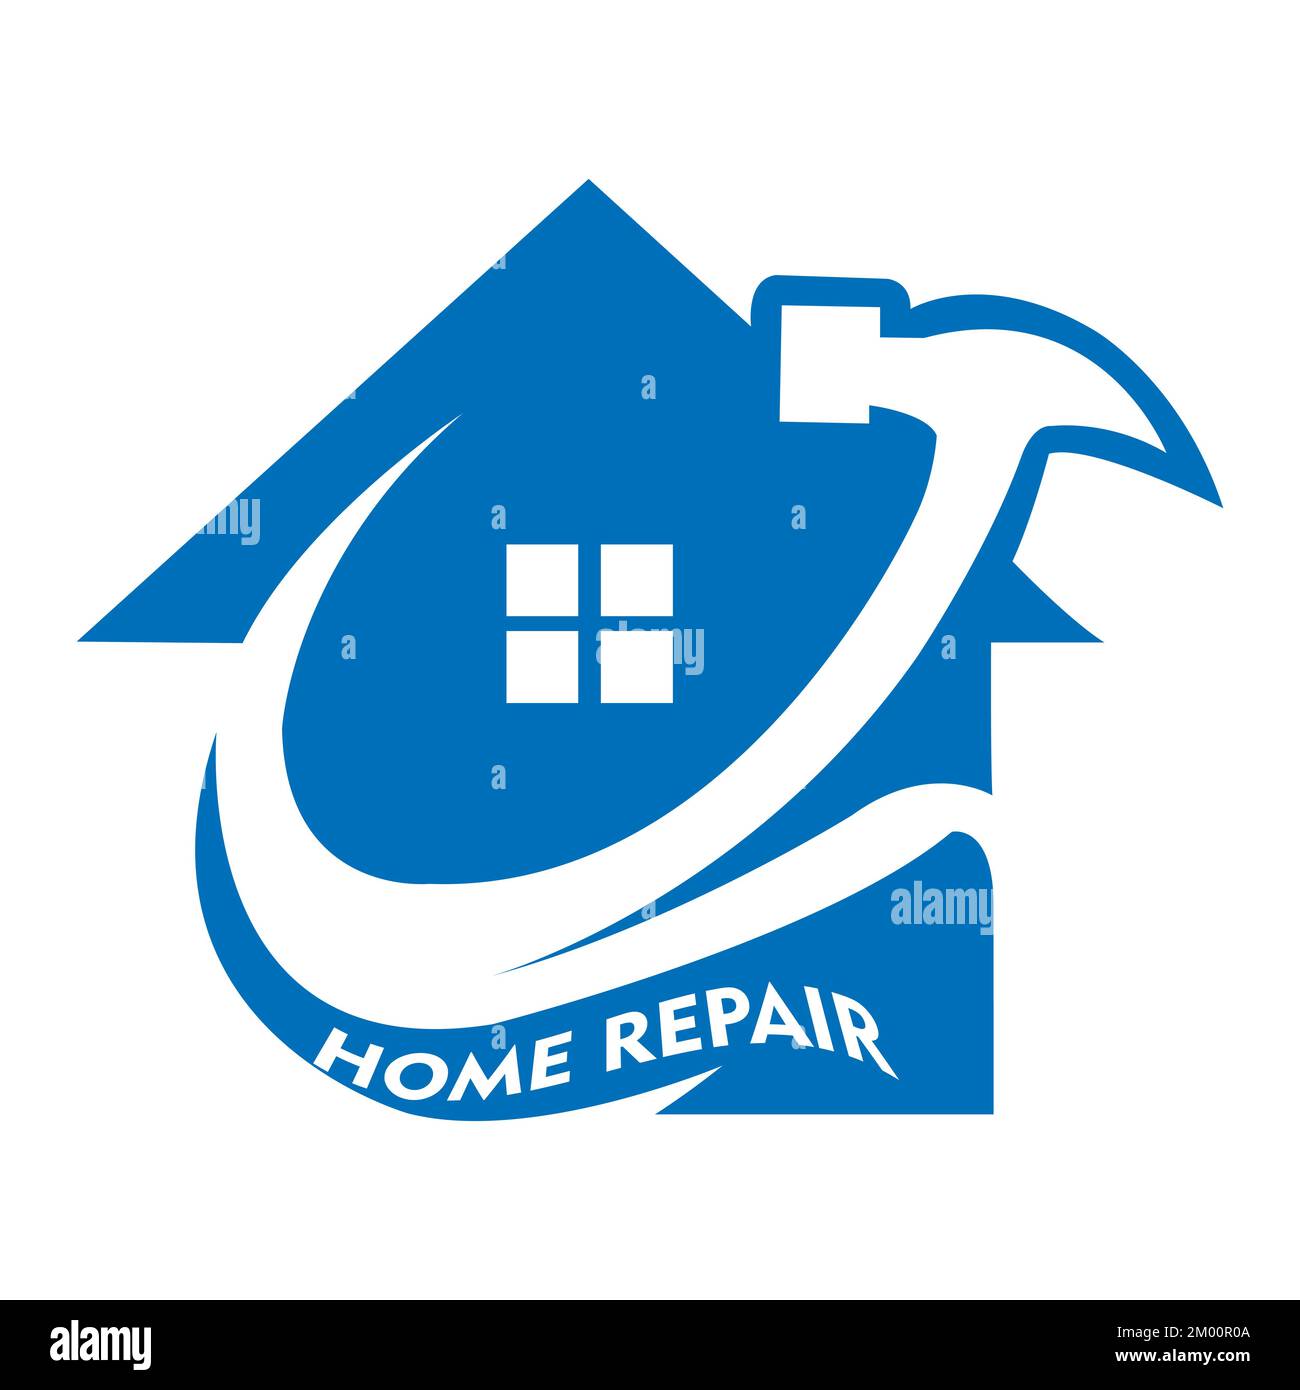 Home Repair Logo Template Design,Tools icon. Home sign repair.EPS10 Stock Vector